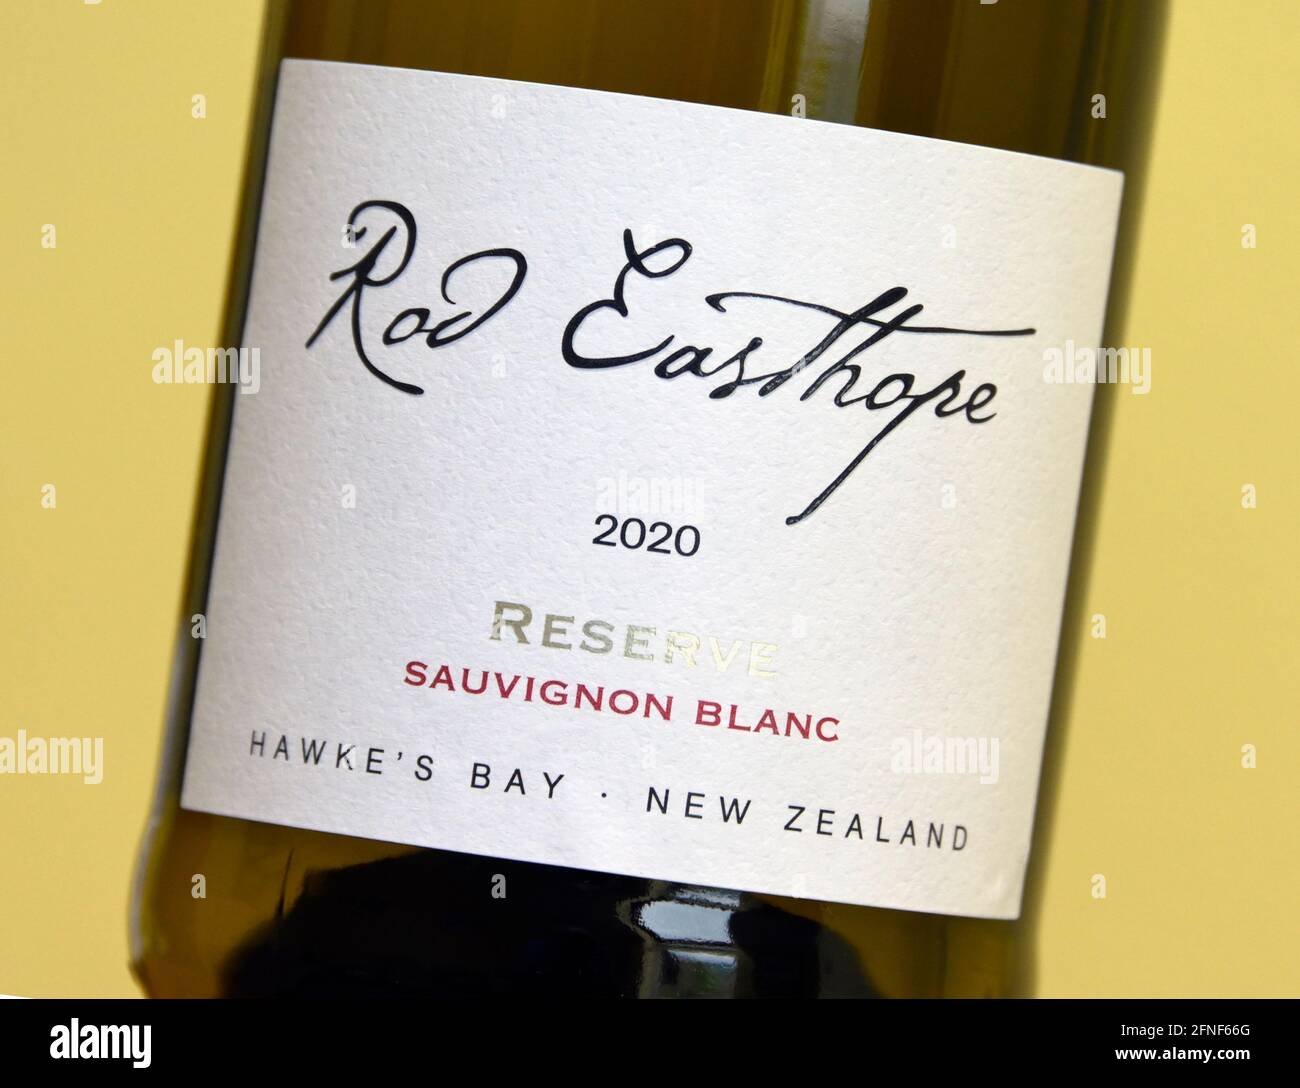 Wine label. Rod Easthope. 2020. Reserve. Sauvignon Blanc. Hawke's Bay New Zealand. Stock Photo